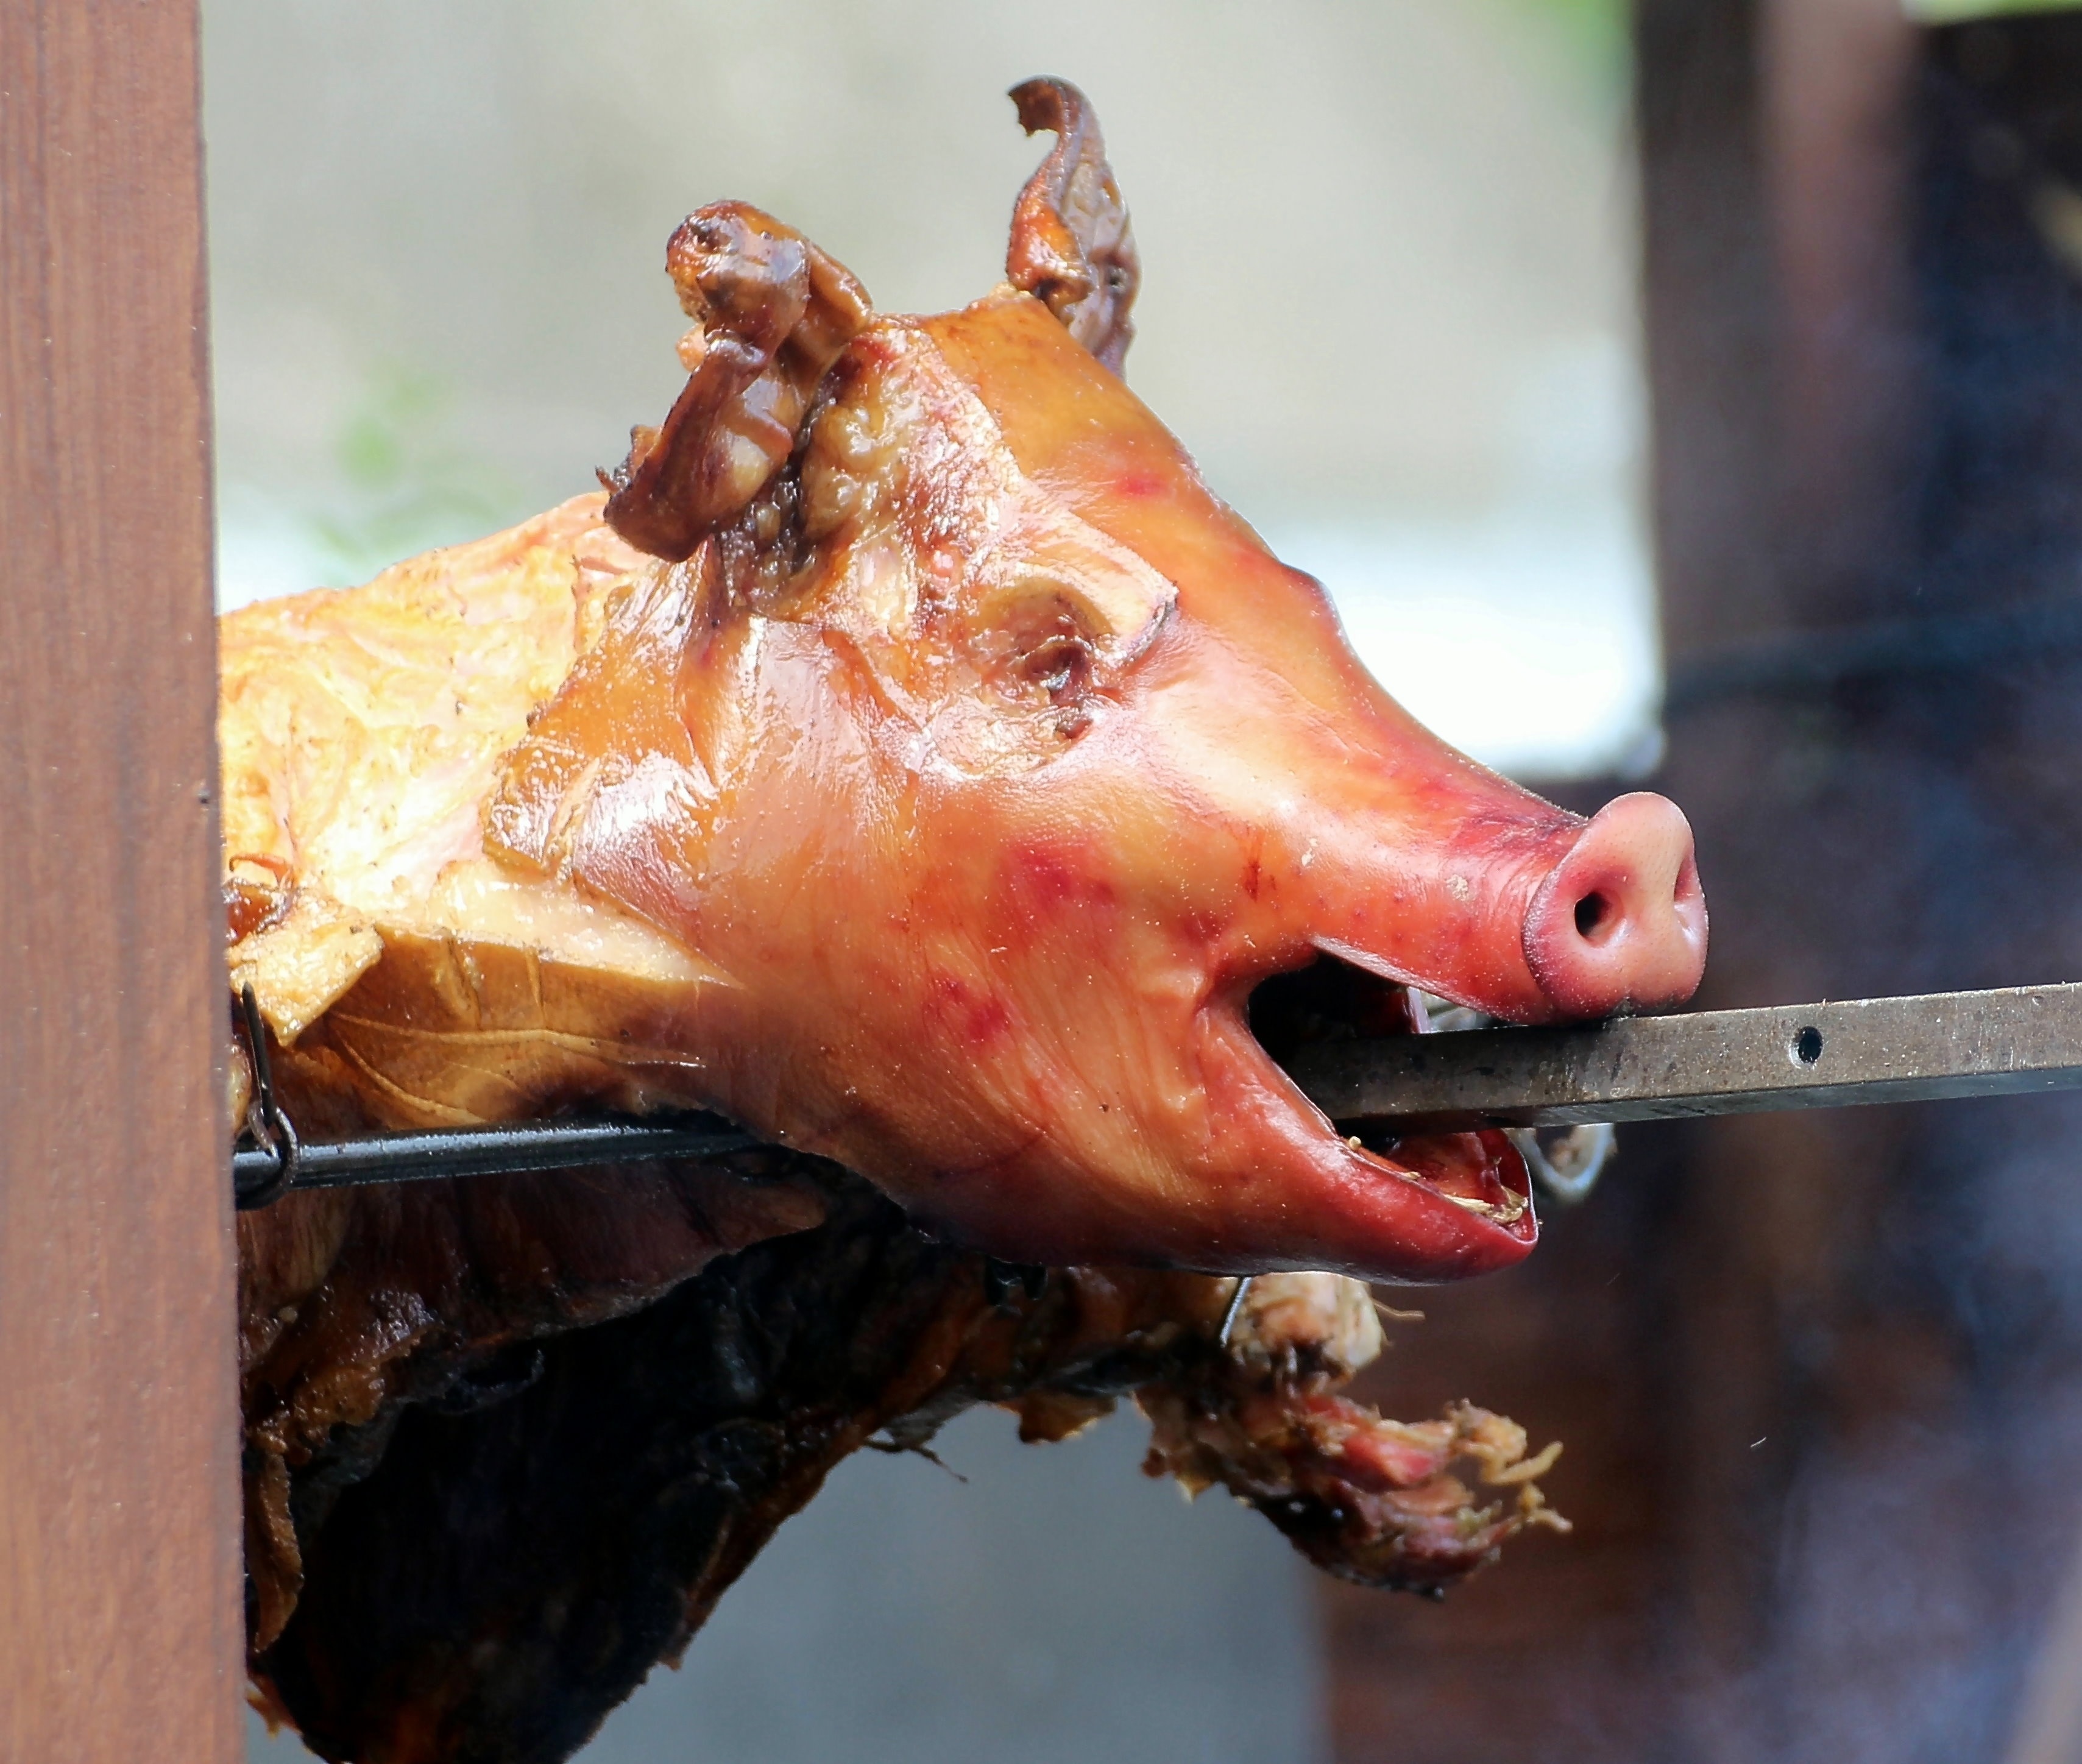 roasted pig on gray steel bar